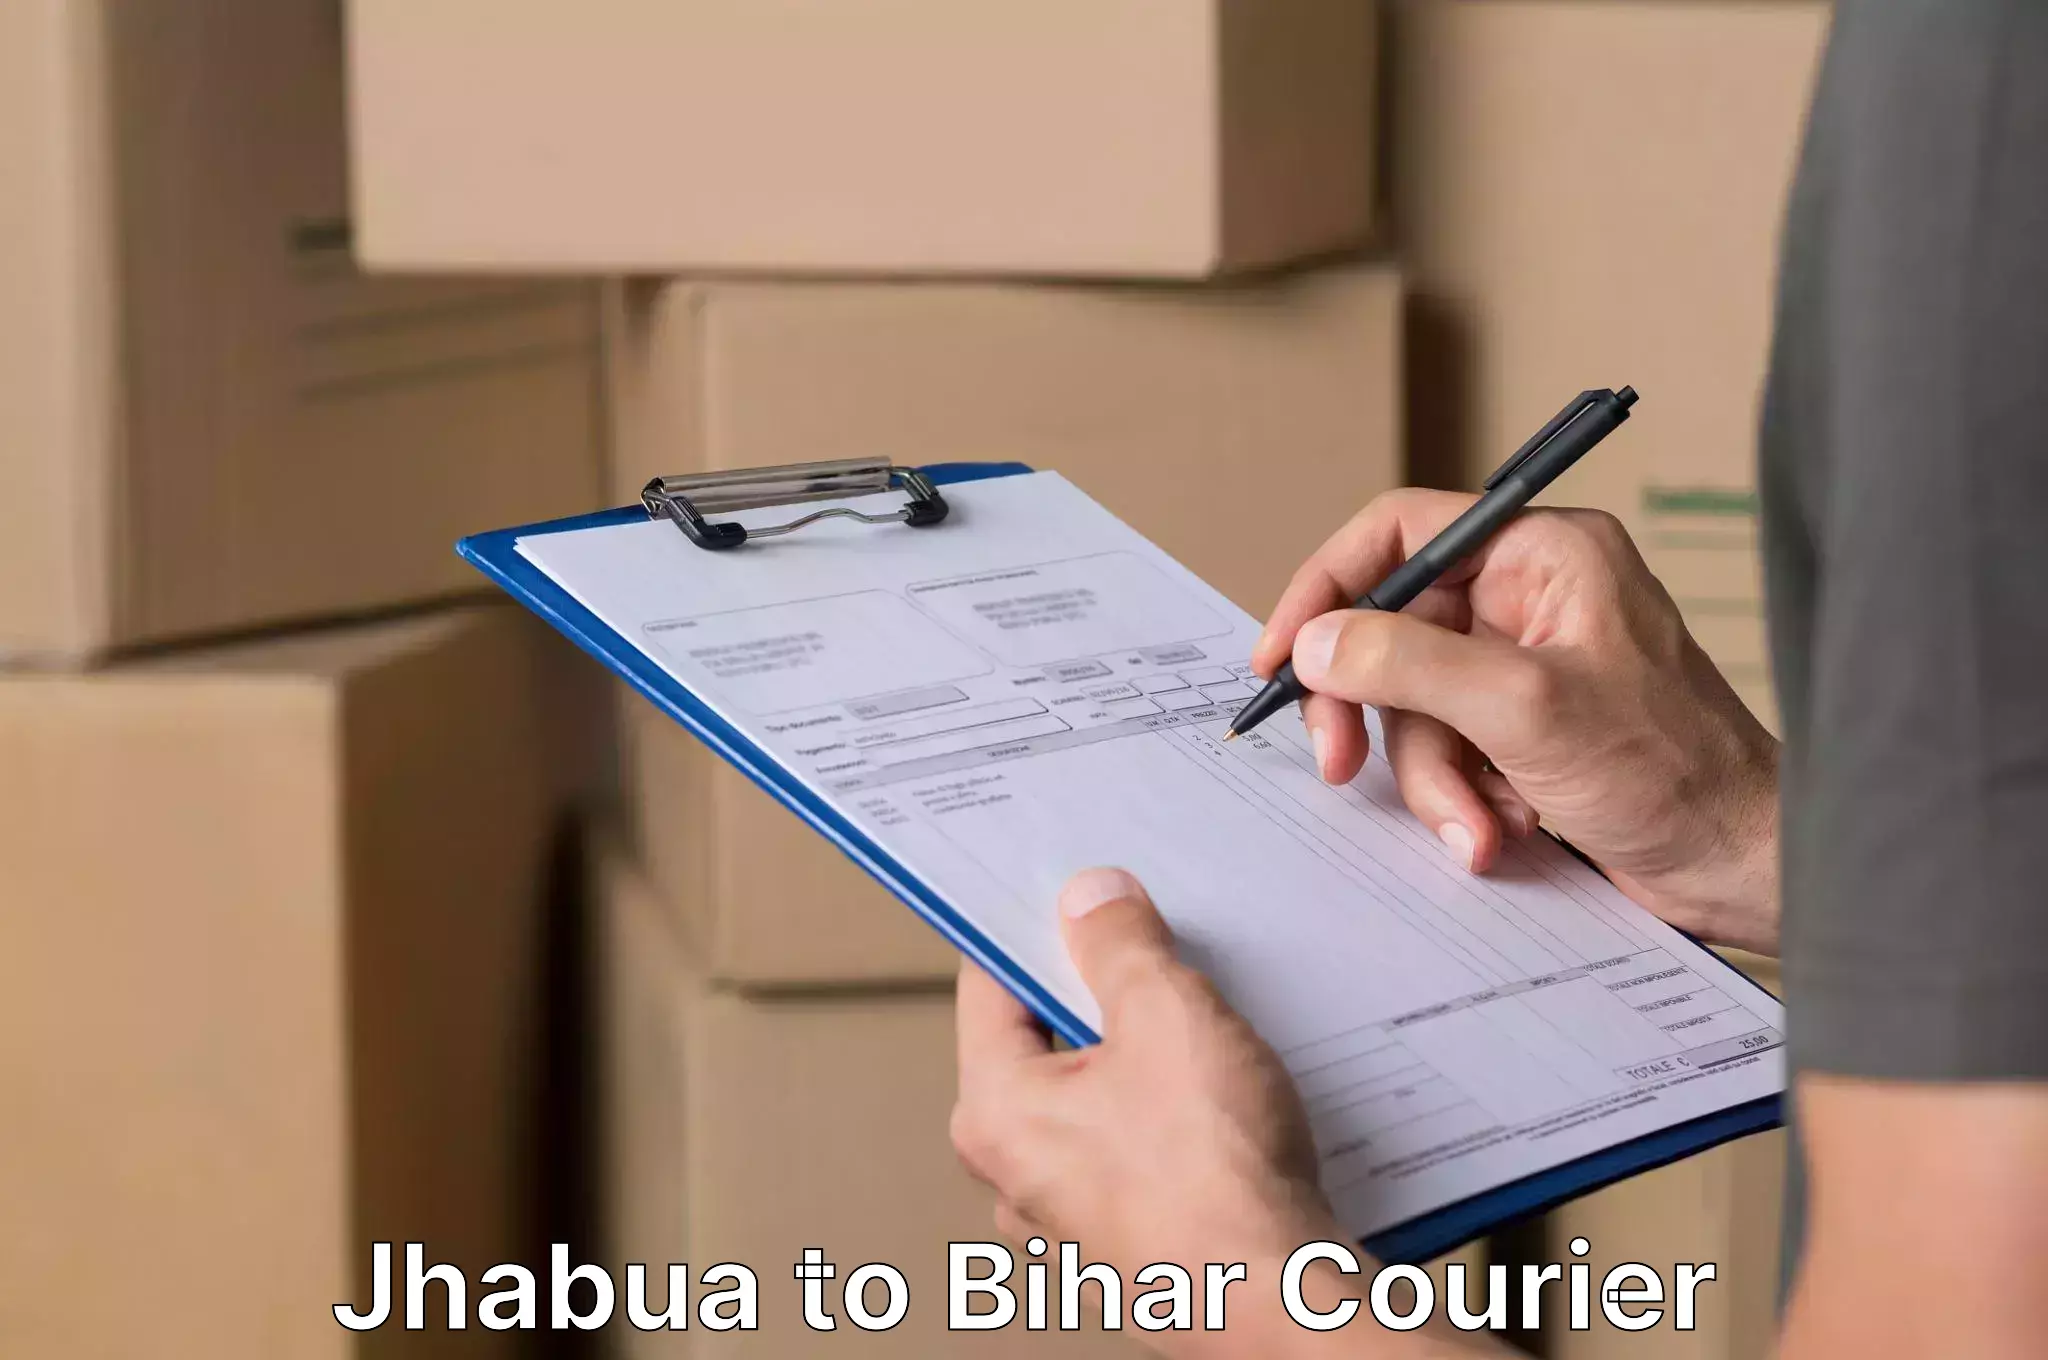 Professional moving company Jhabua to Bakhri